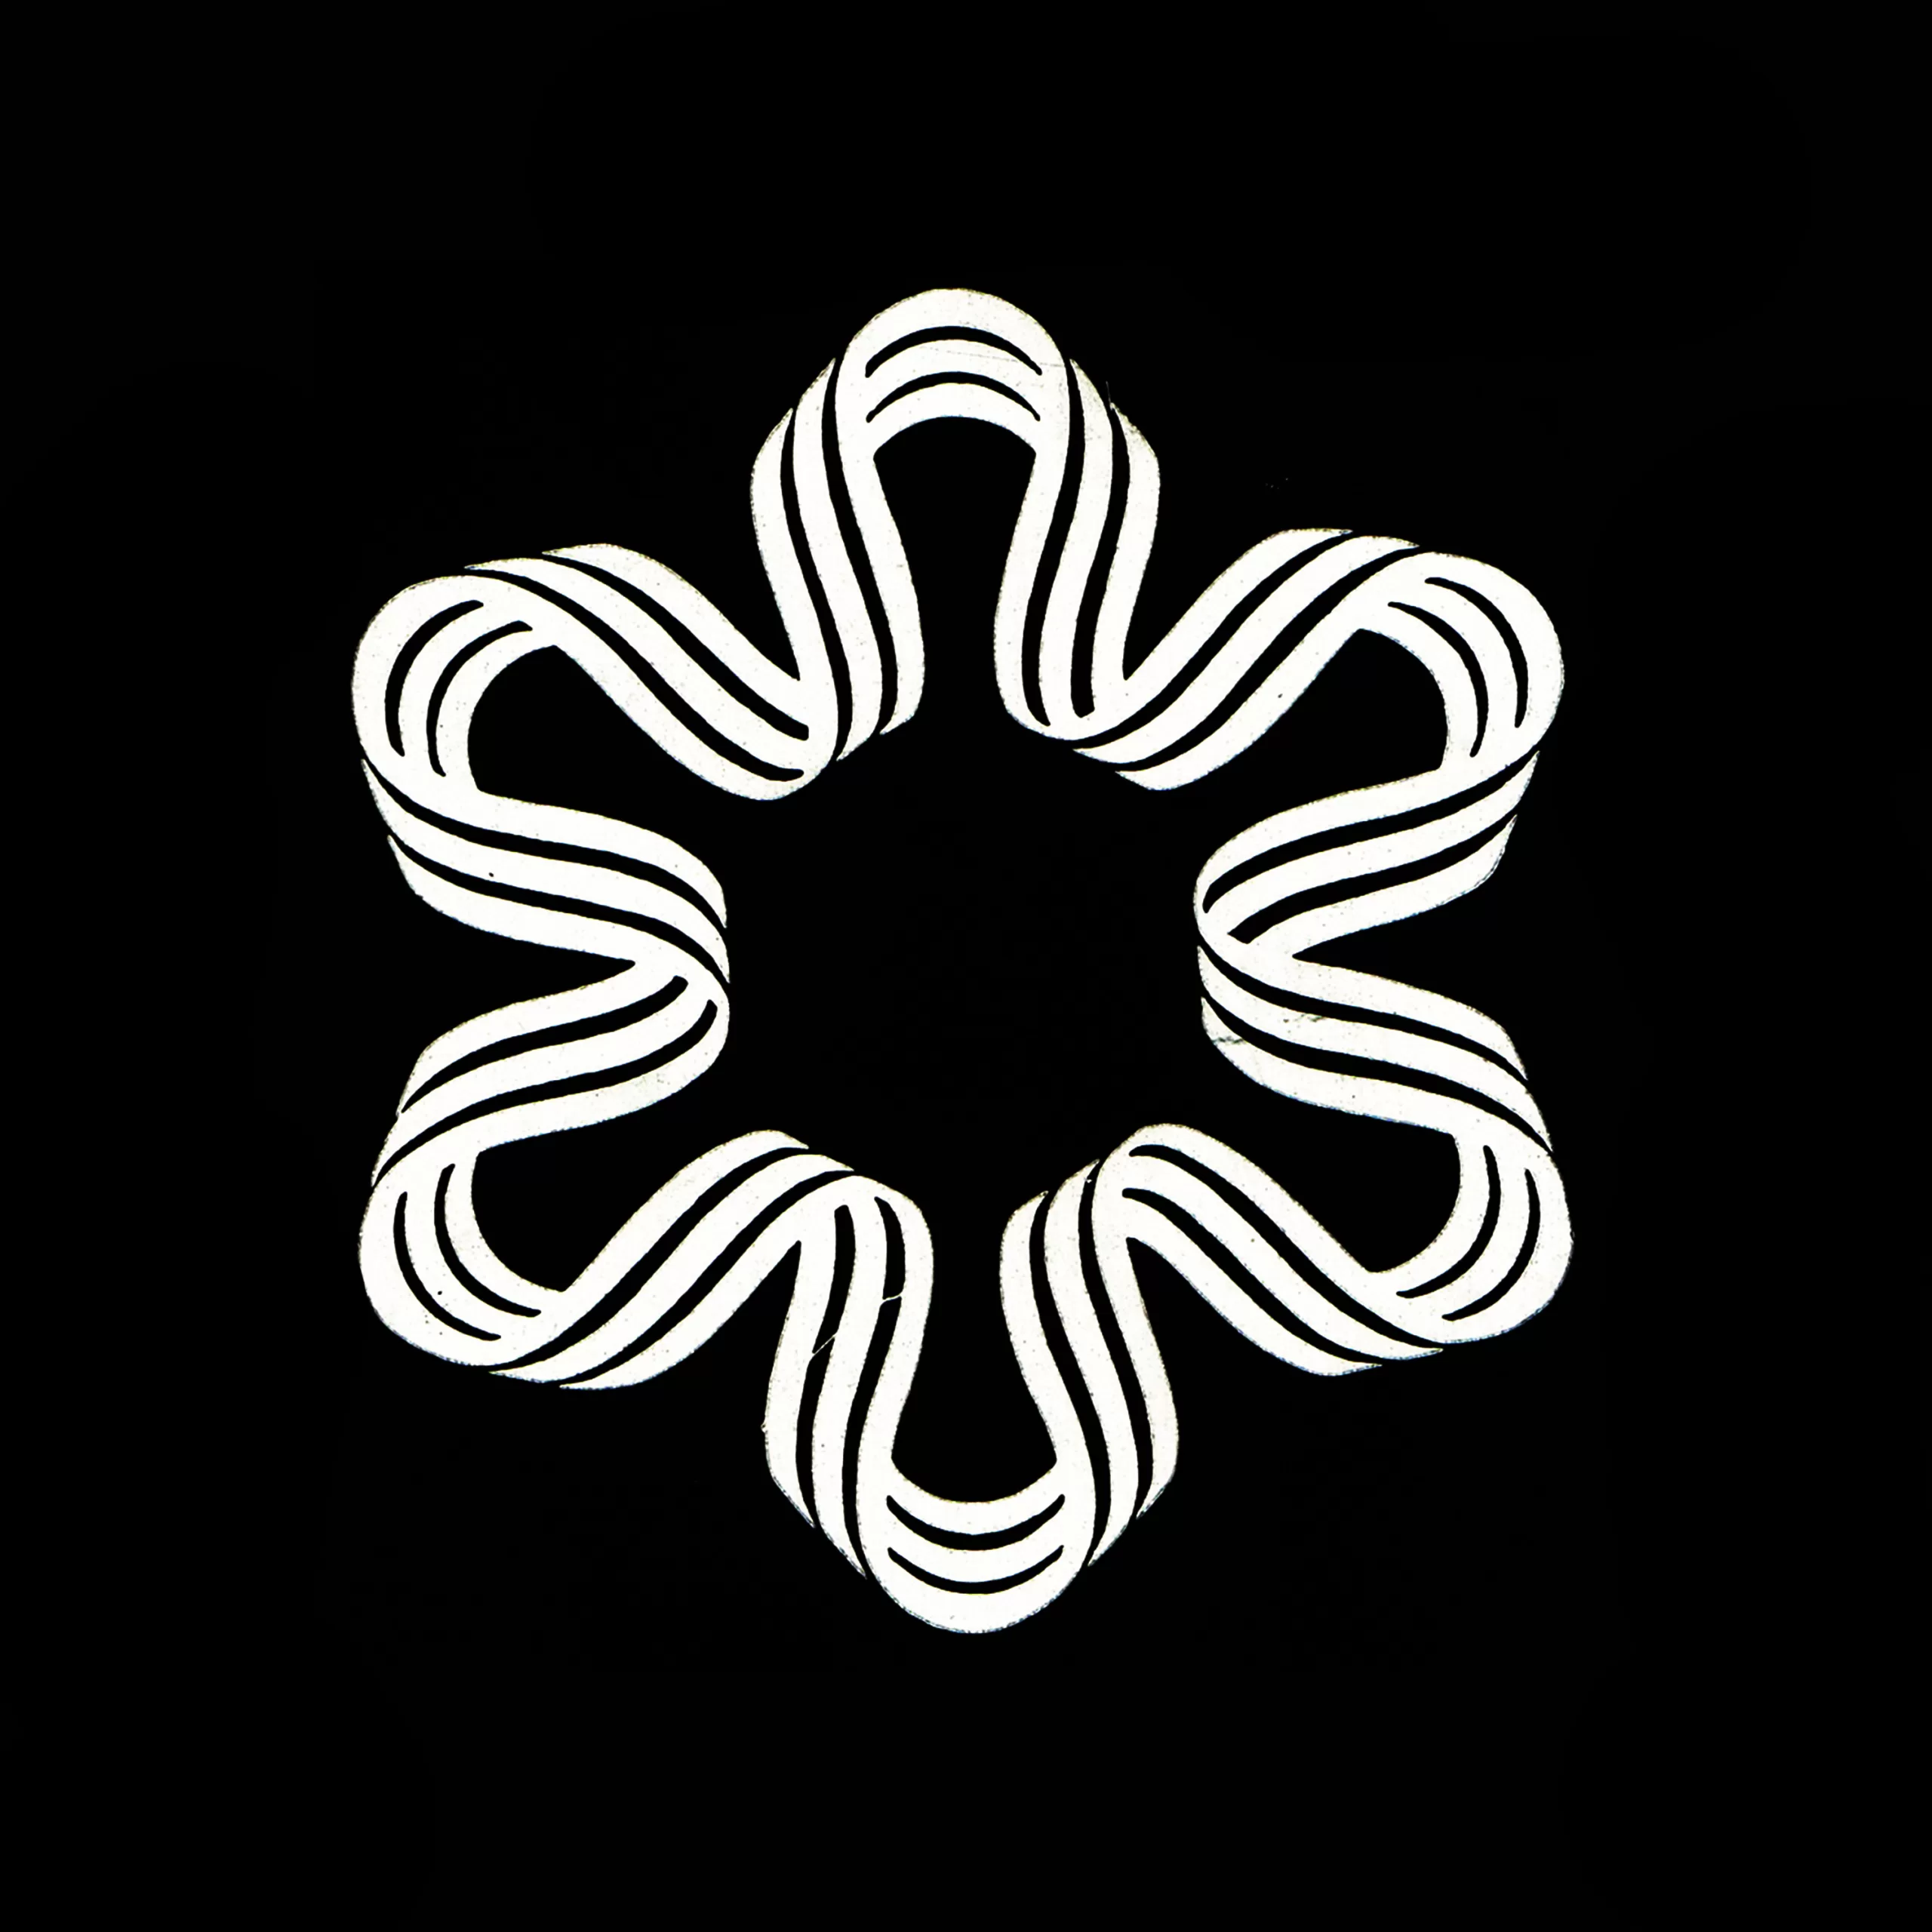 Toho Paper Company logo designed by Yusaku Kamekura